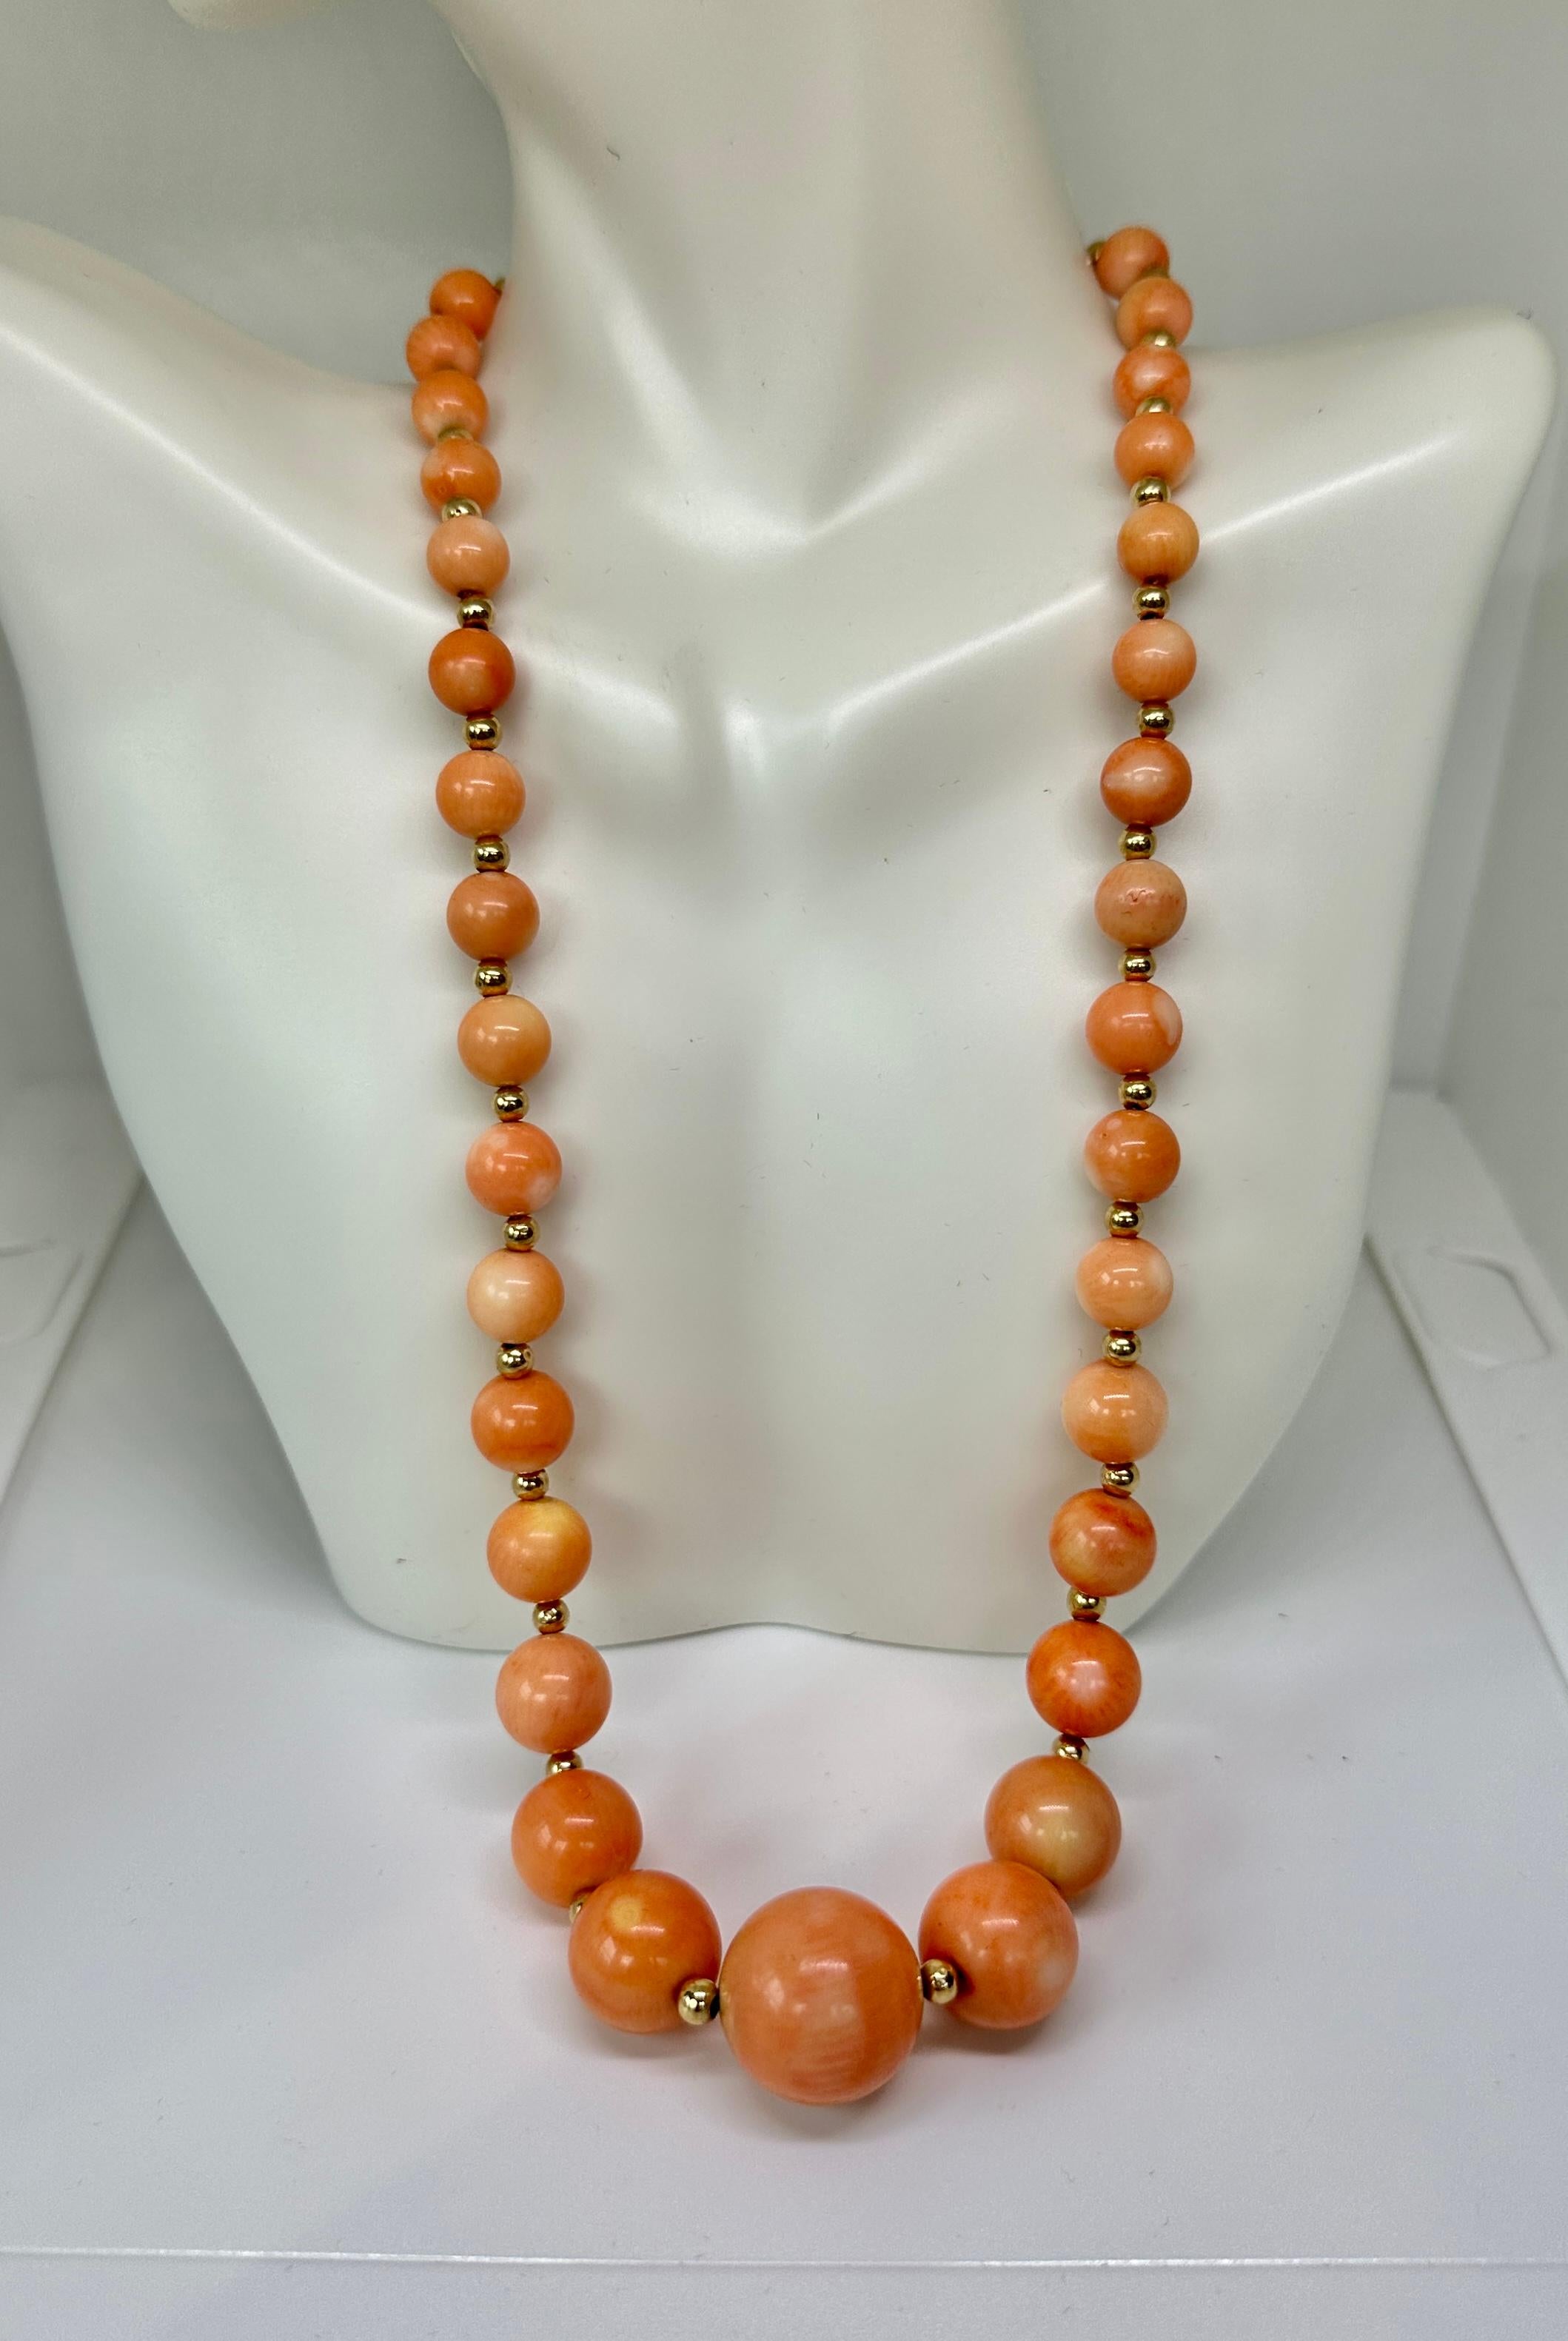 momo coral beads